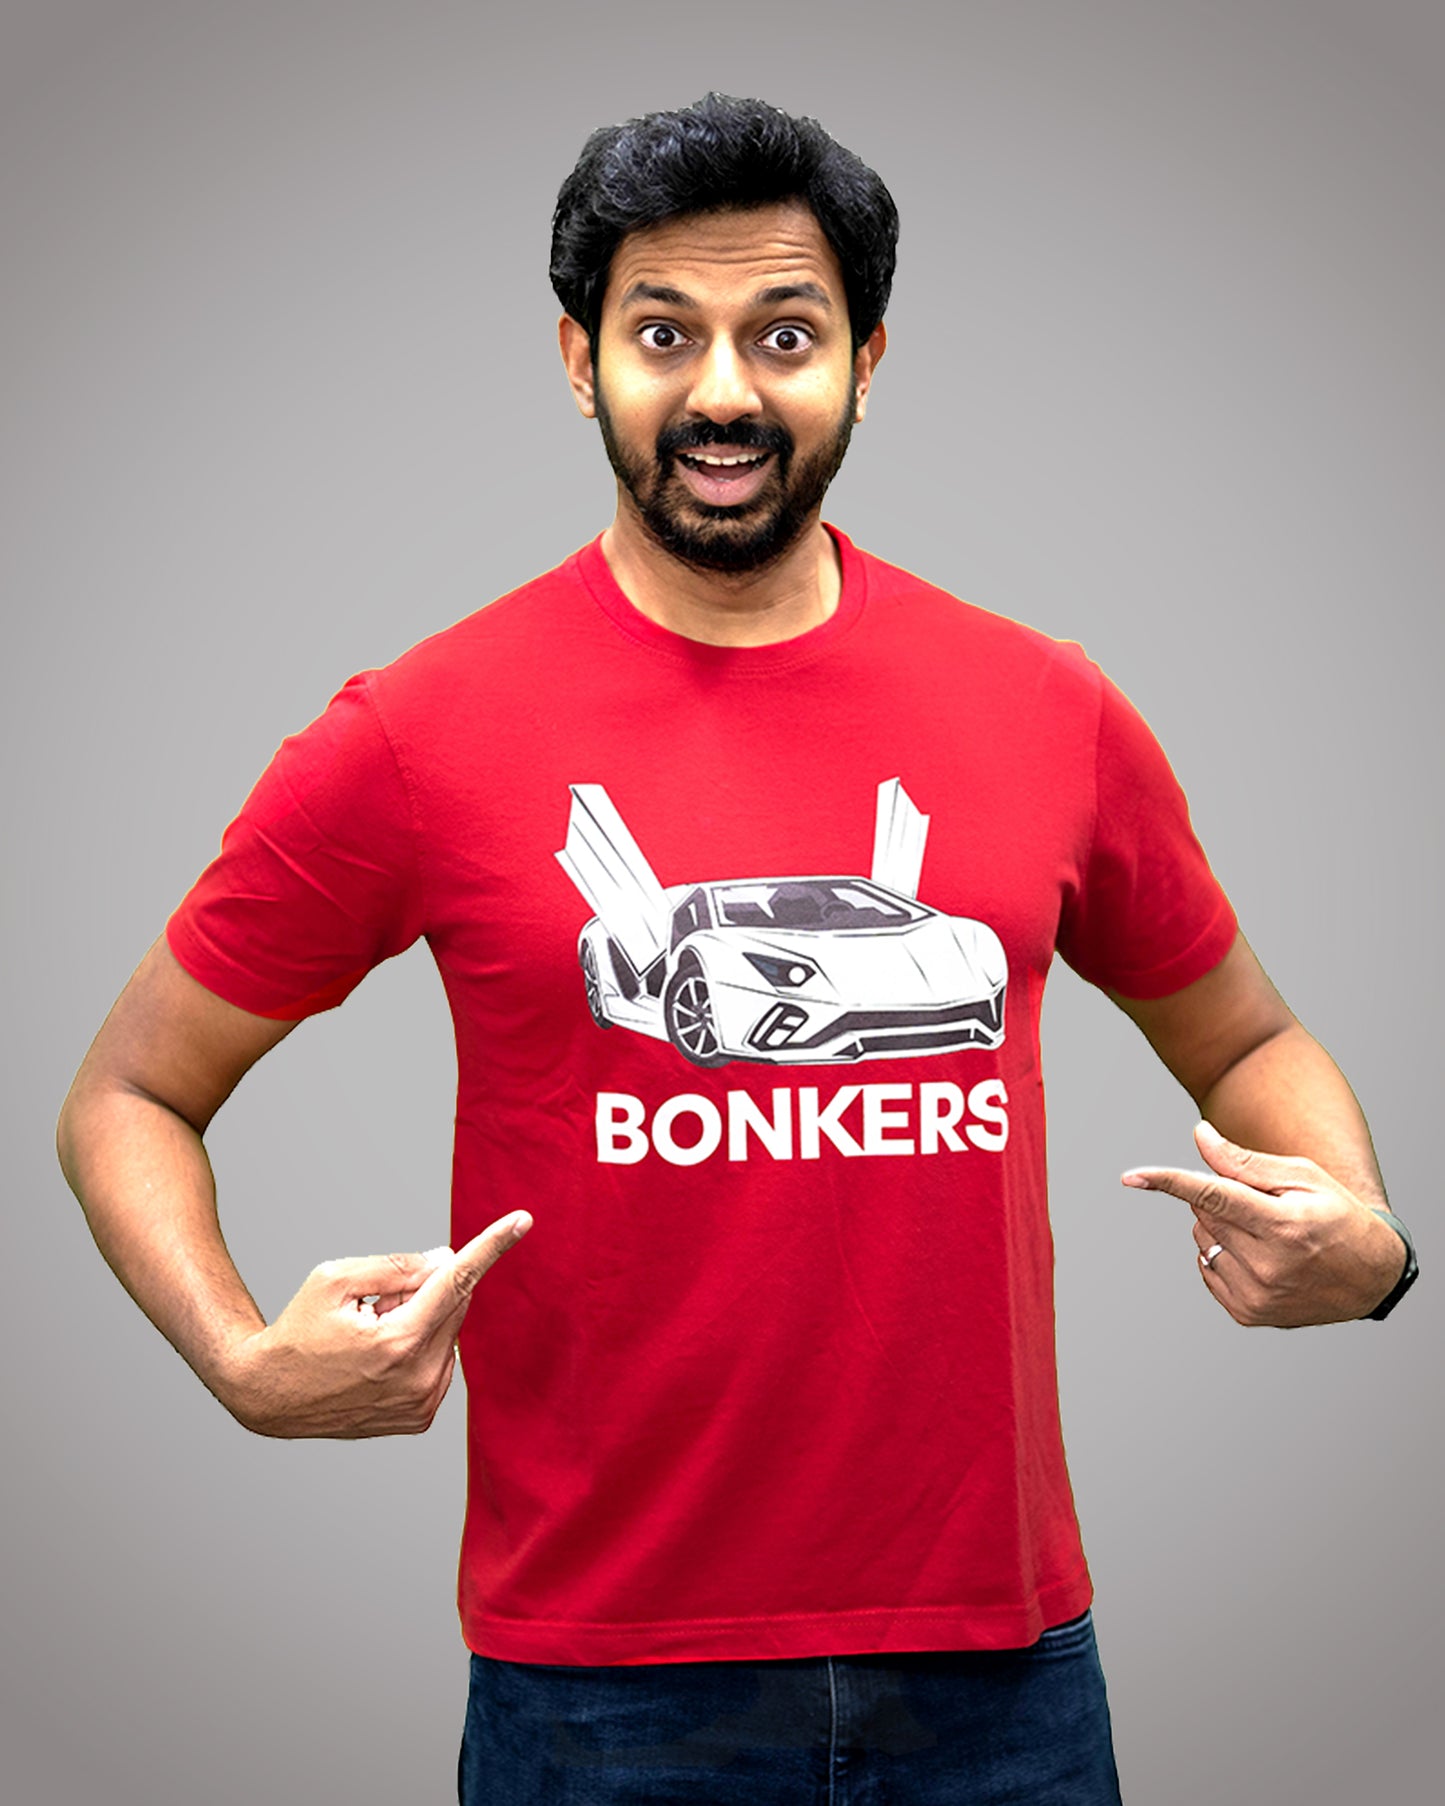 Bonkers Tshirt